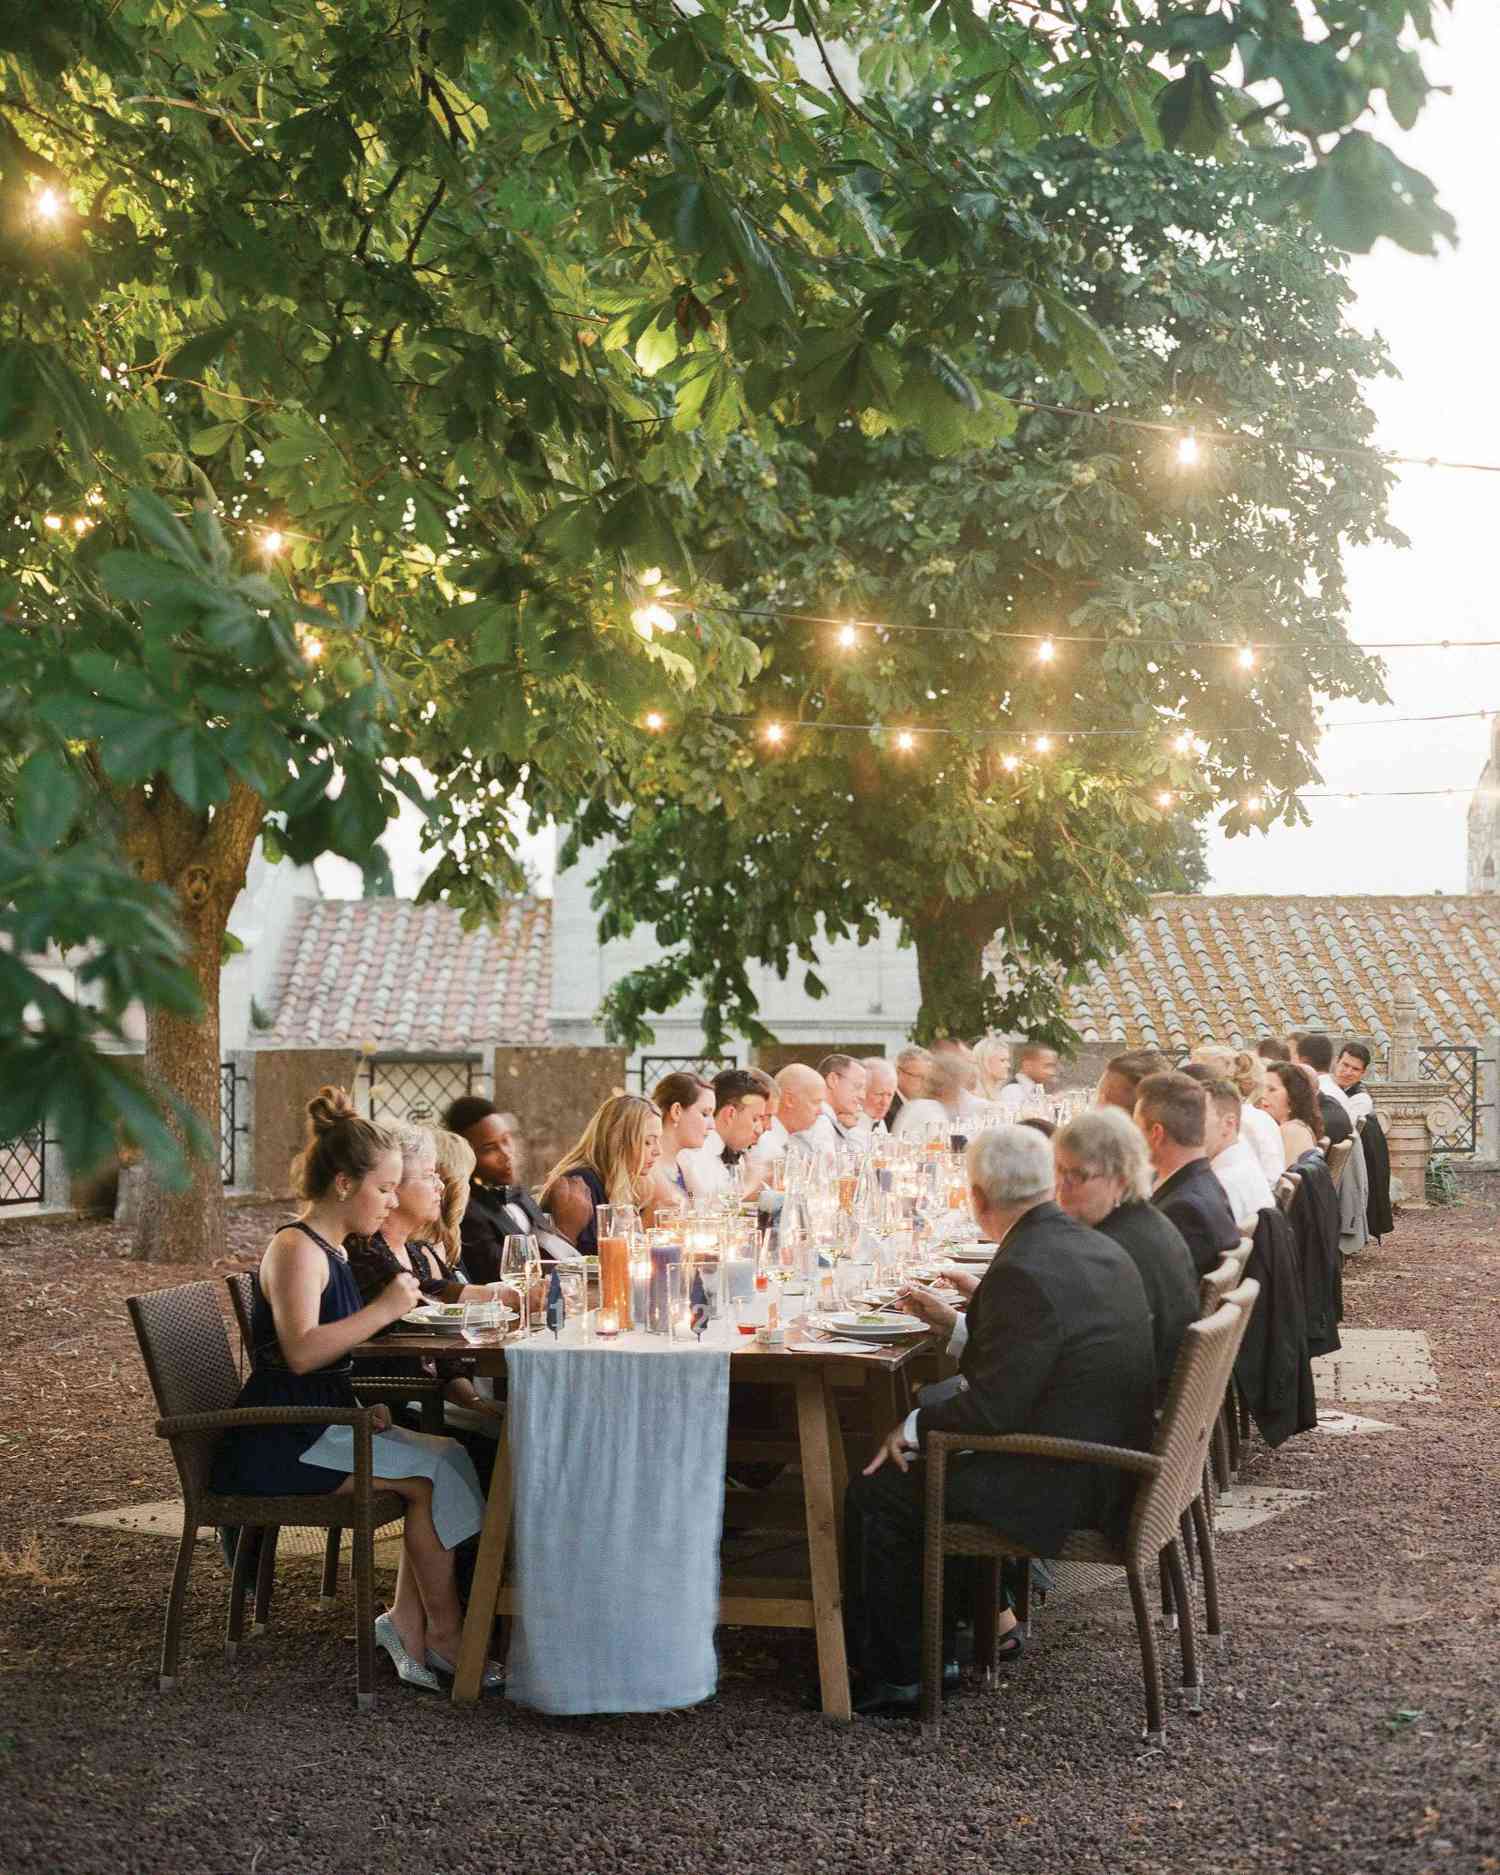 dennis-bryan-wedding-italy-reception-dinner-table-078-0840-s112633.jpg